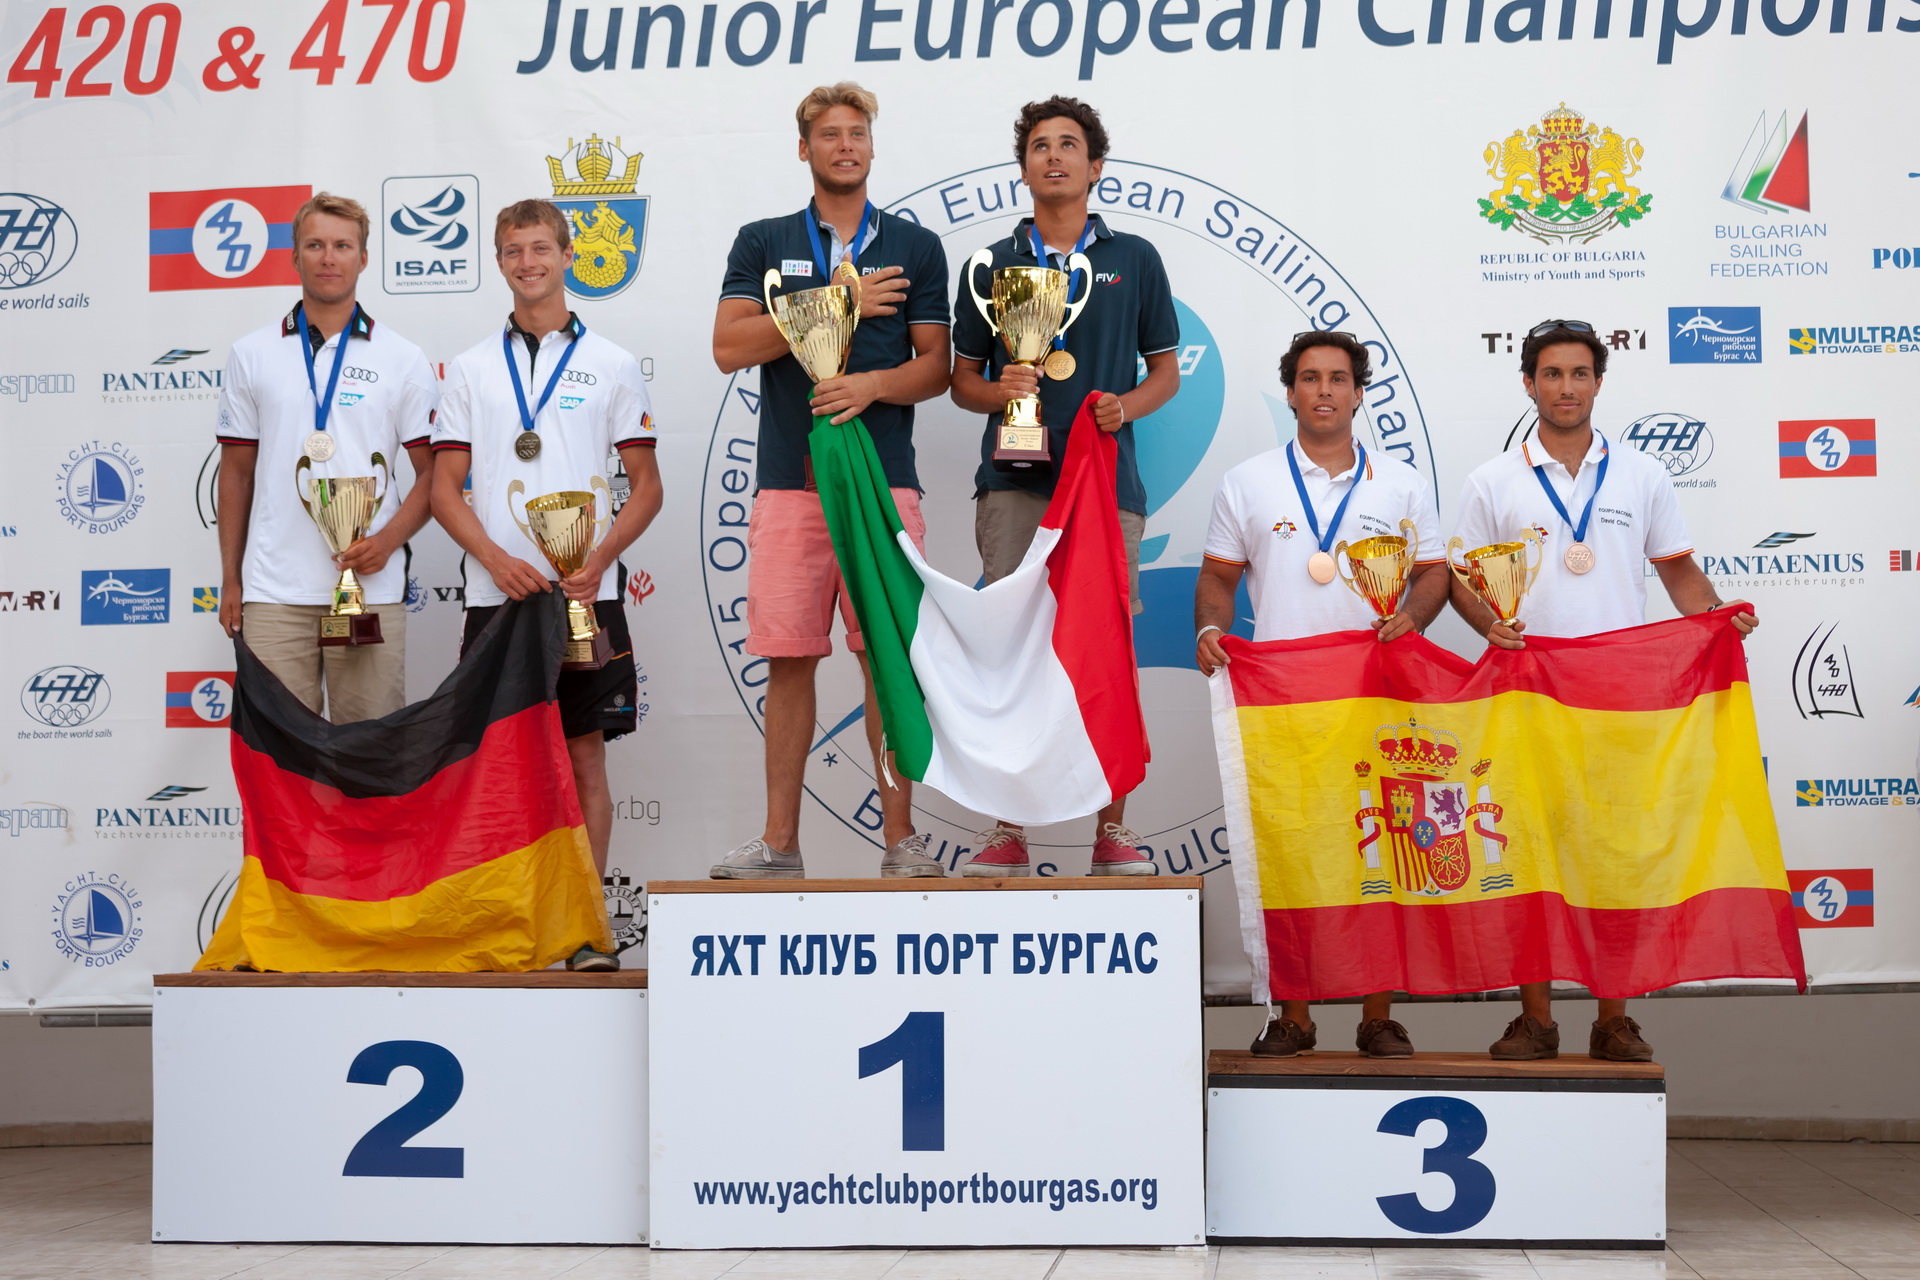 470 Men Junior European Gold, Silver and Bronze Medallists